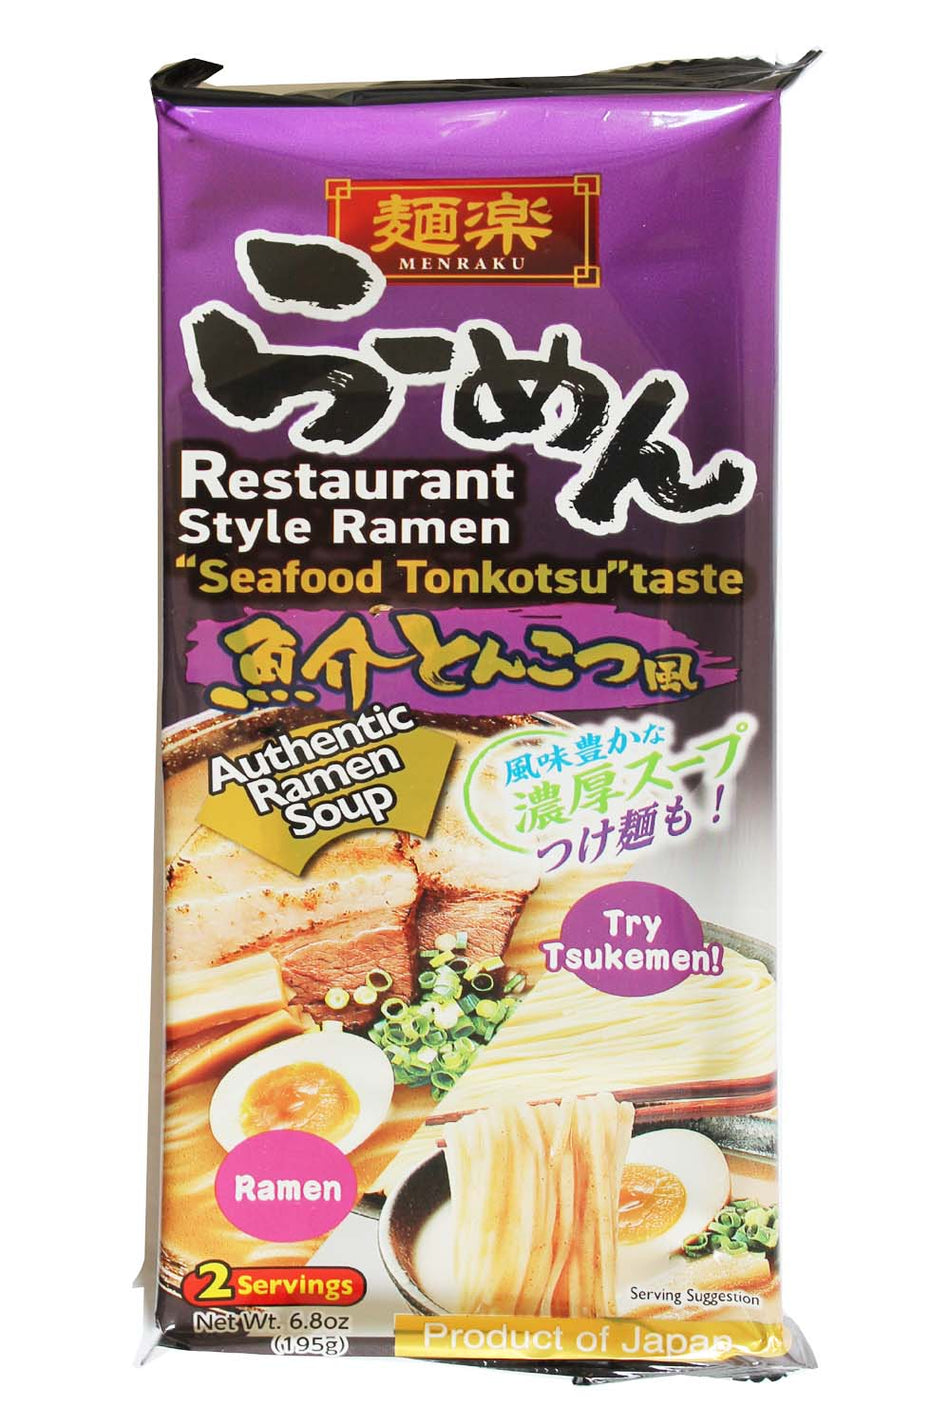 Menraku Seafood Tonkotsu taste Ramen